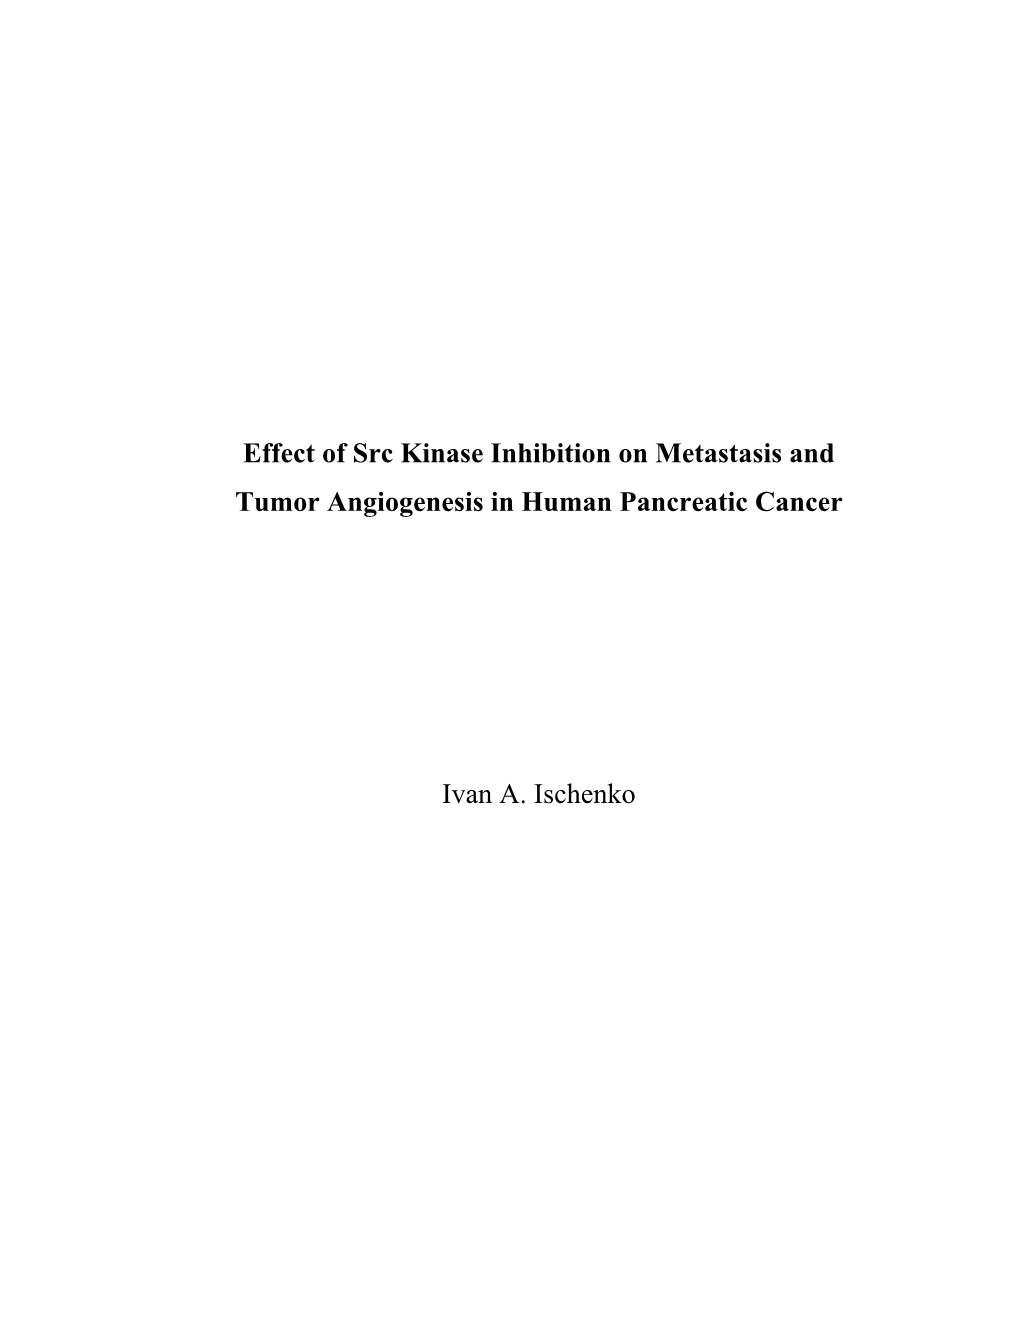 Effect of Src Kinase Inhibition on Metastasis and Tumor Angiogenesis in Human Pancreatic Cancer